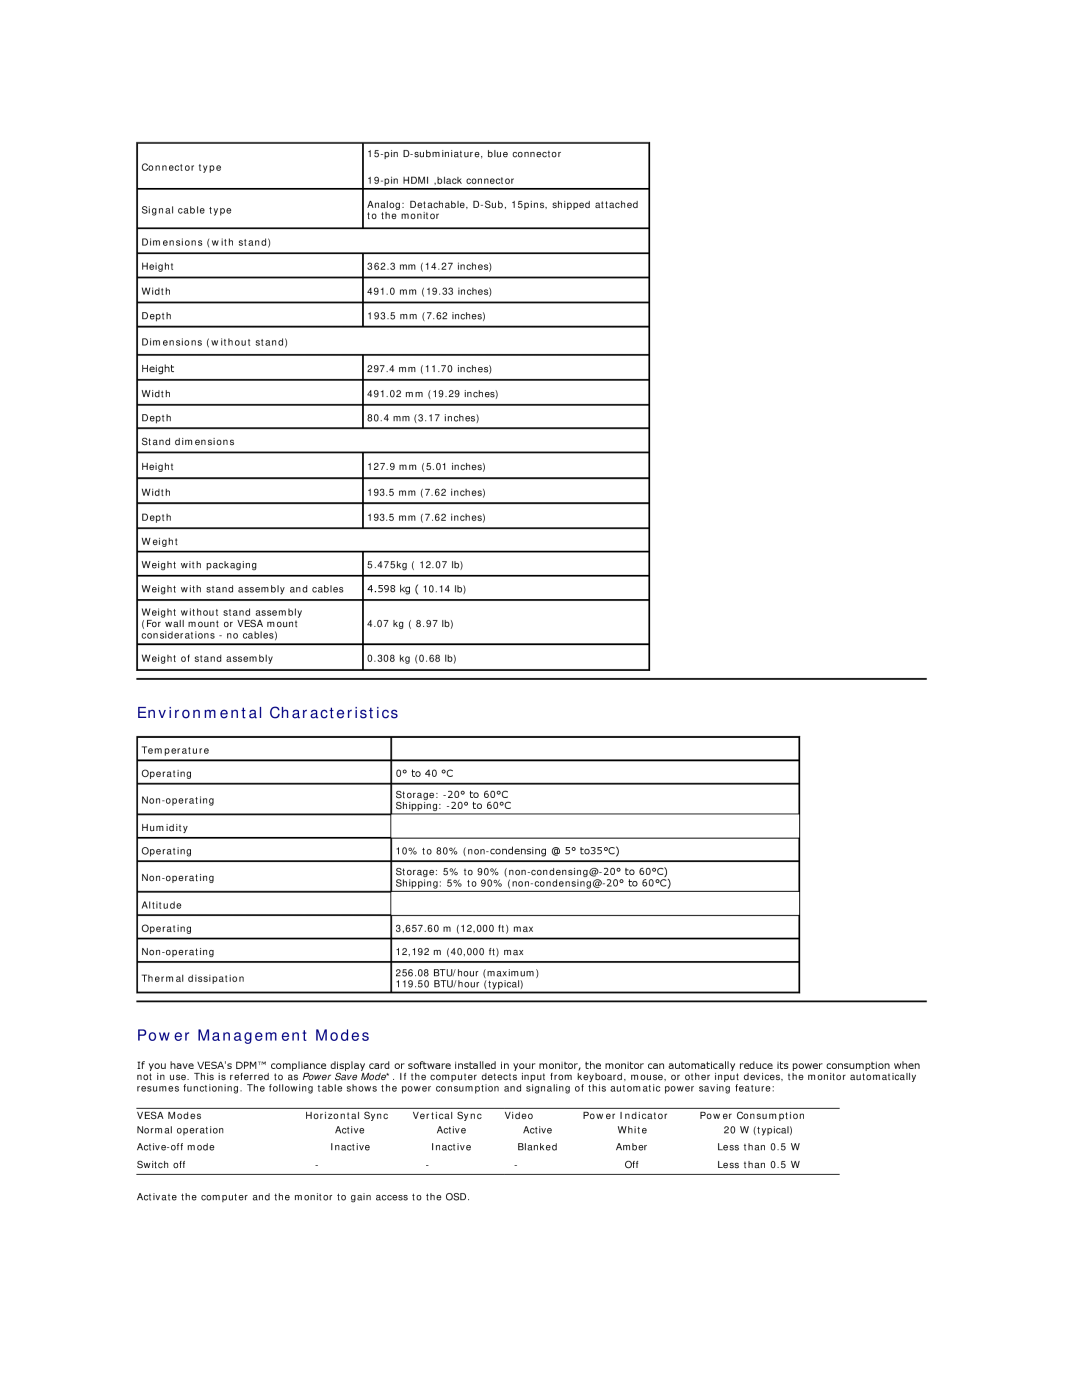 Dell ST2010B appendix Environmental Characteristics, Power Management Modes 